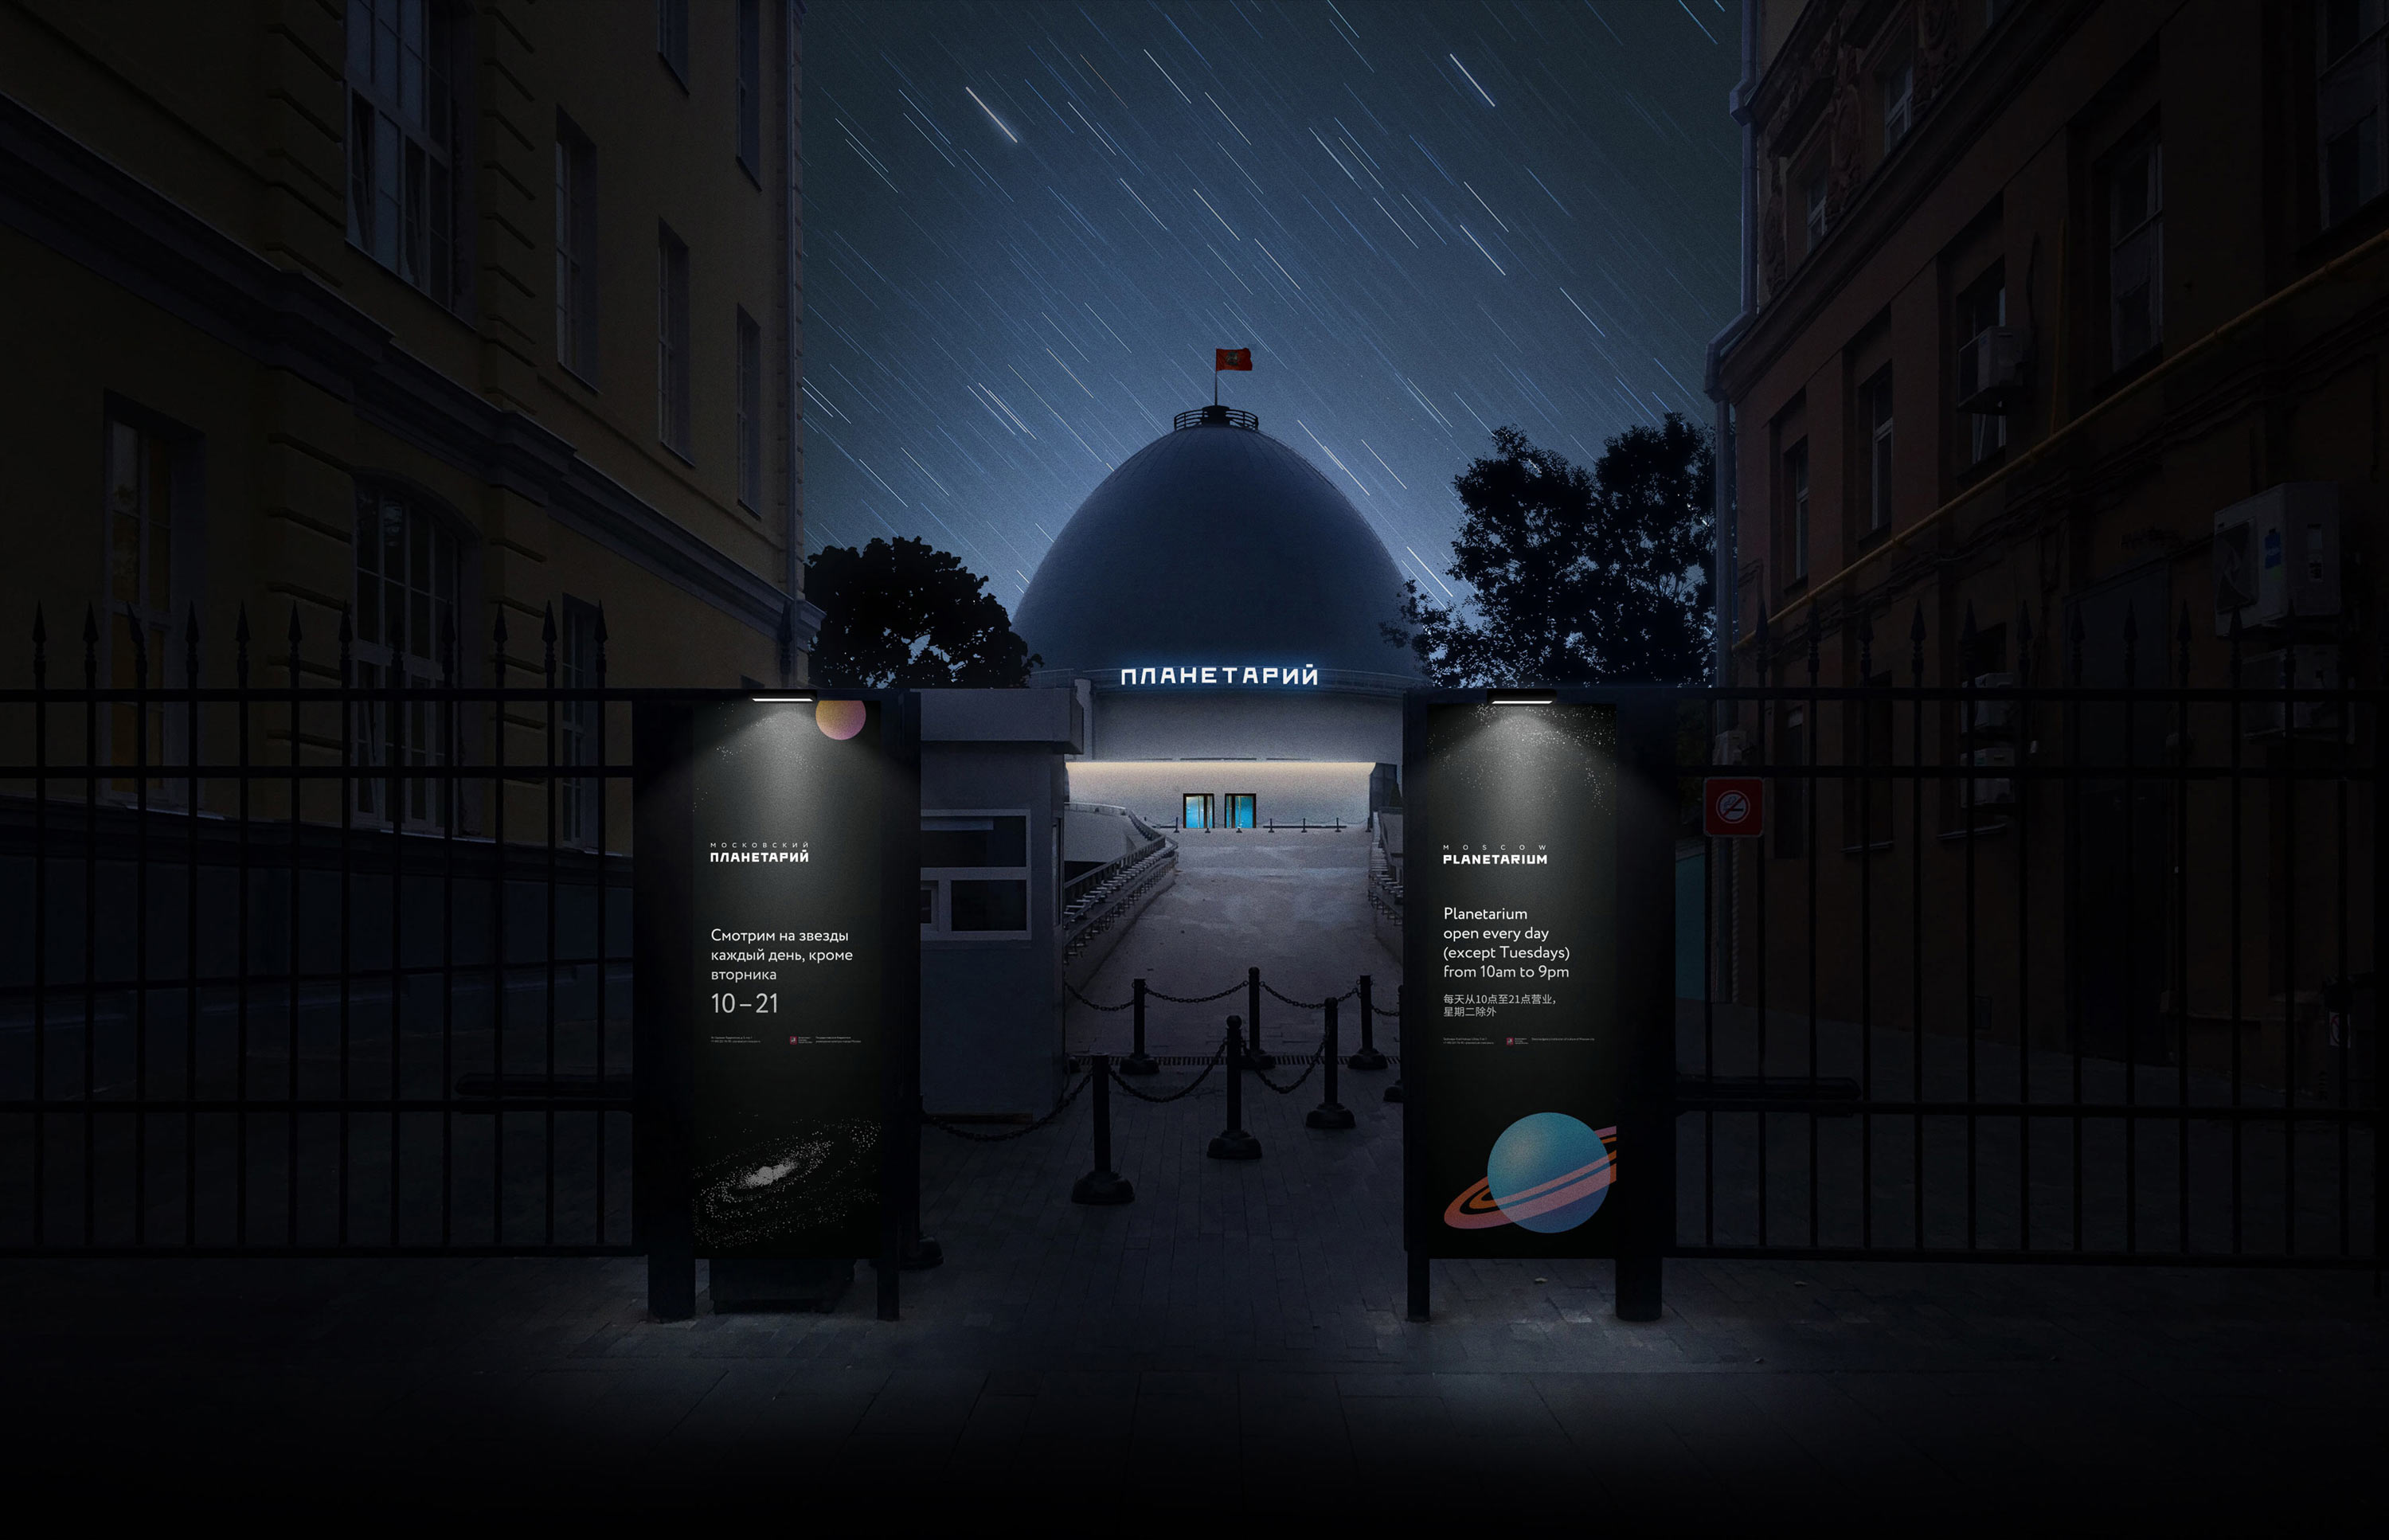 moscow planetarium entrance